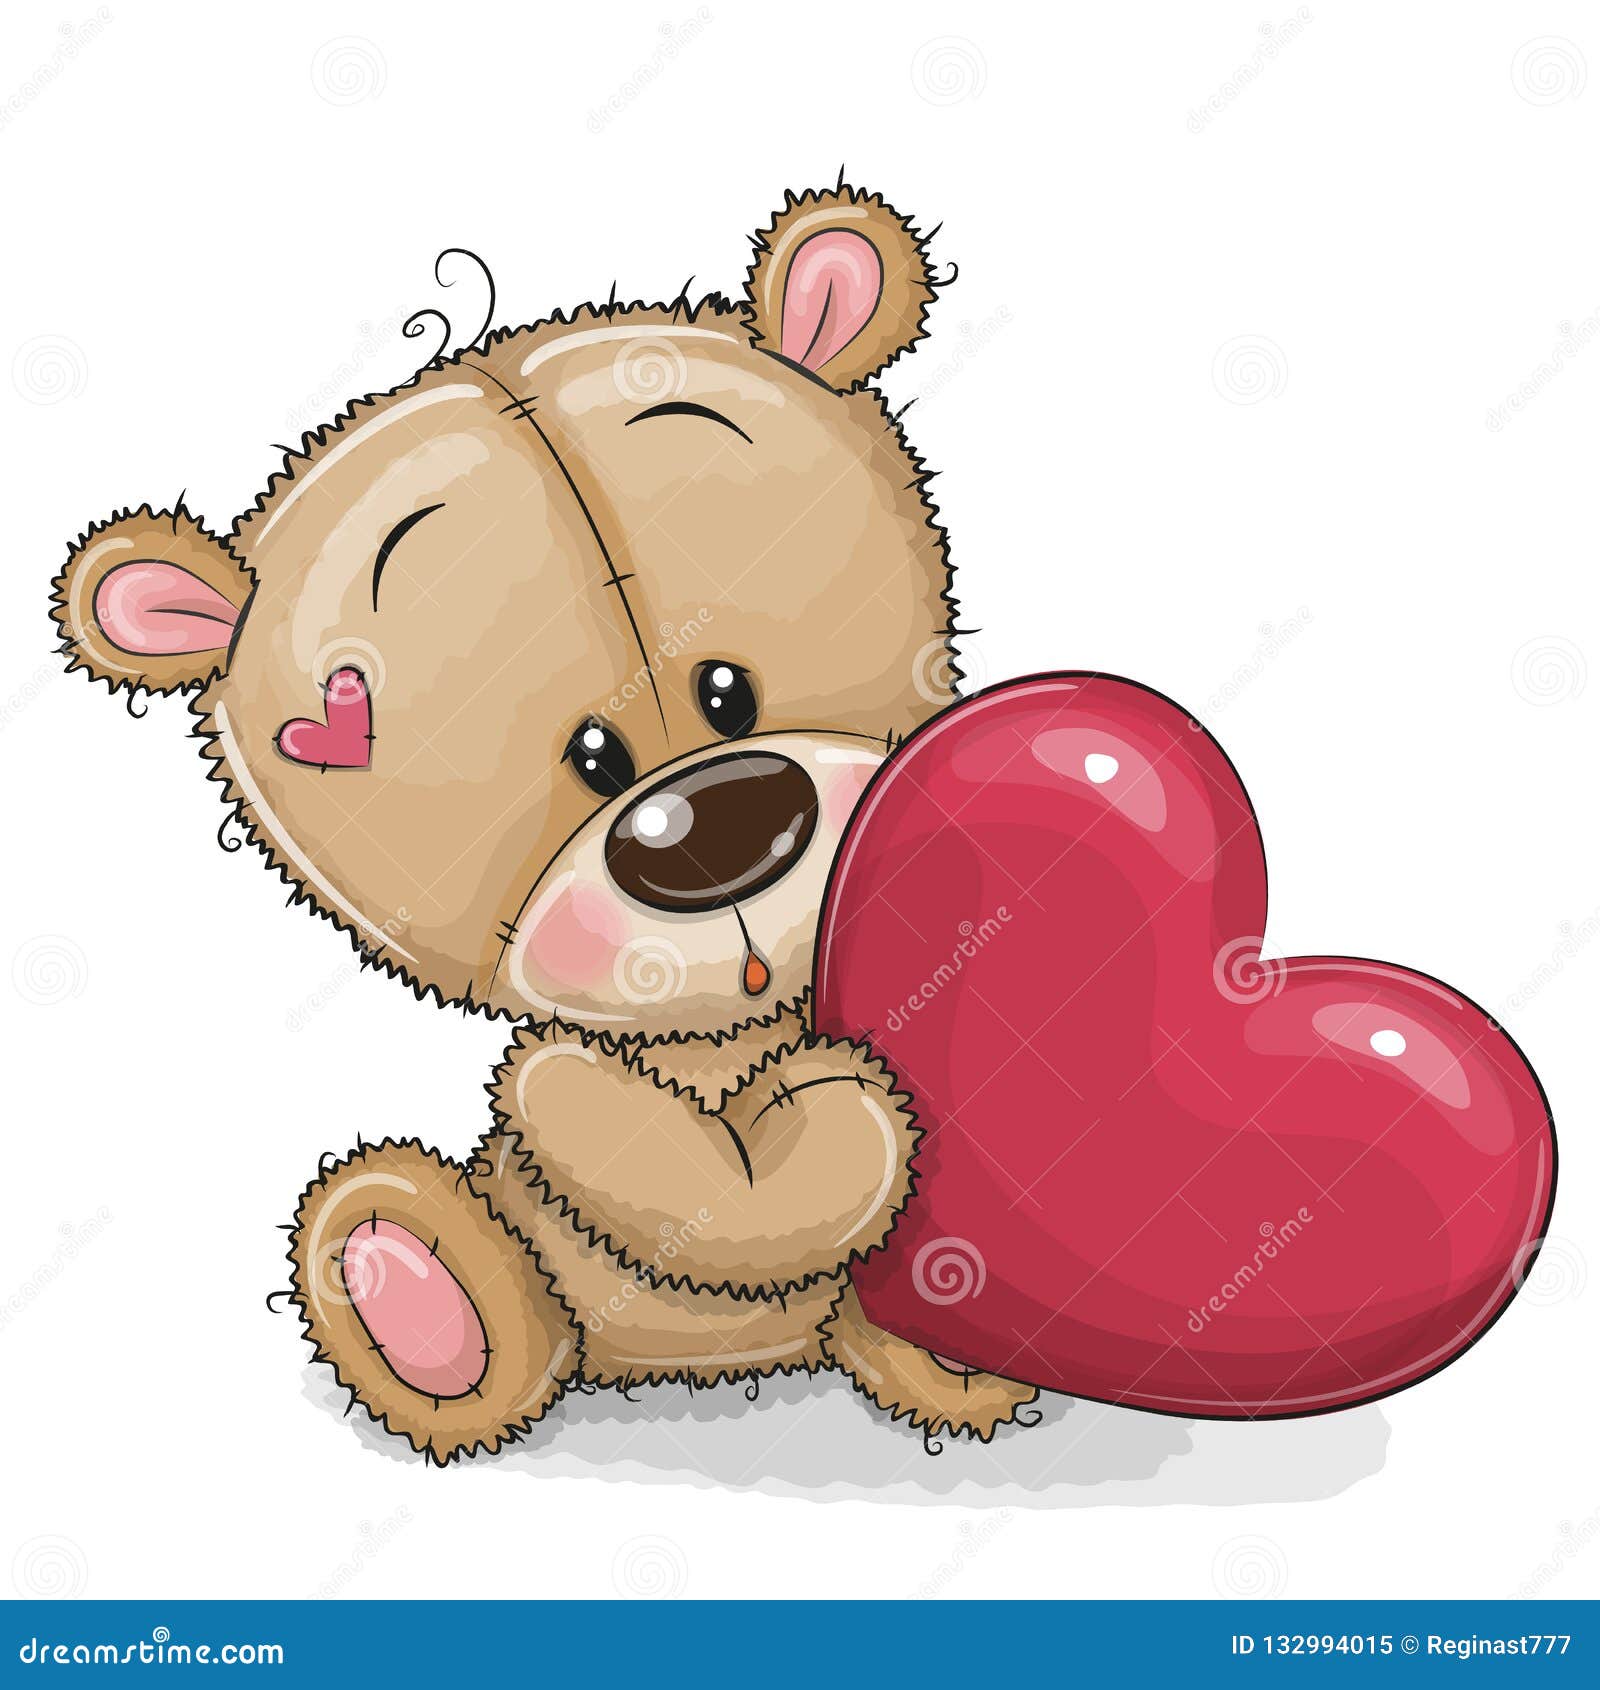 Cute Teddy Bear with heart stock vector. Illustration of baby - 132994015